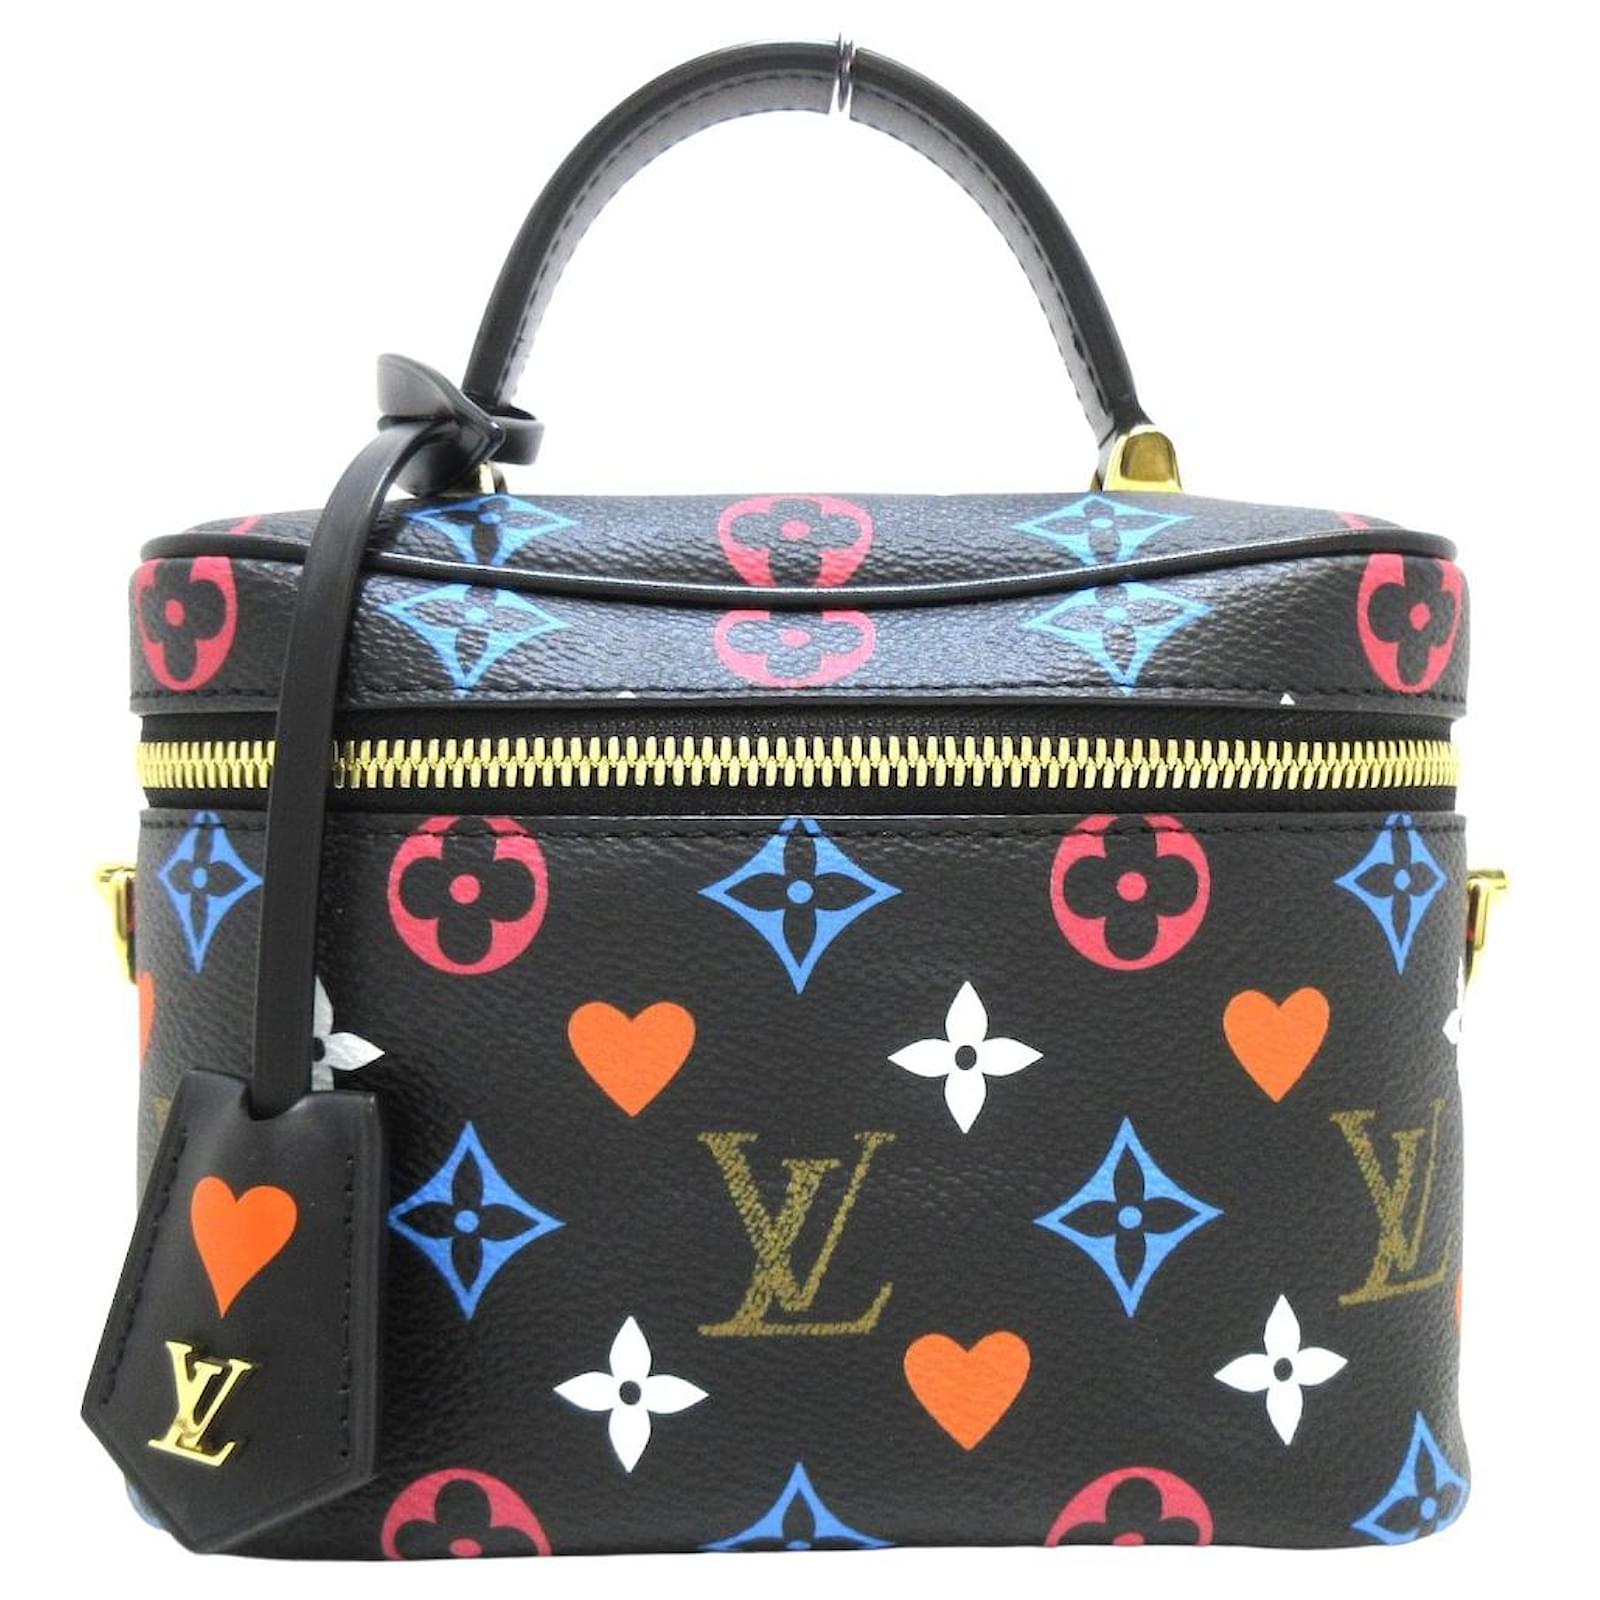 Louis Vuitton, Bags, Louis Vuitton Box And Dust Bag